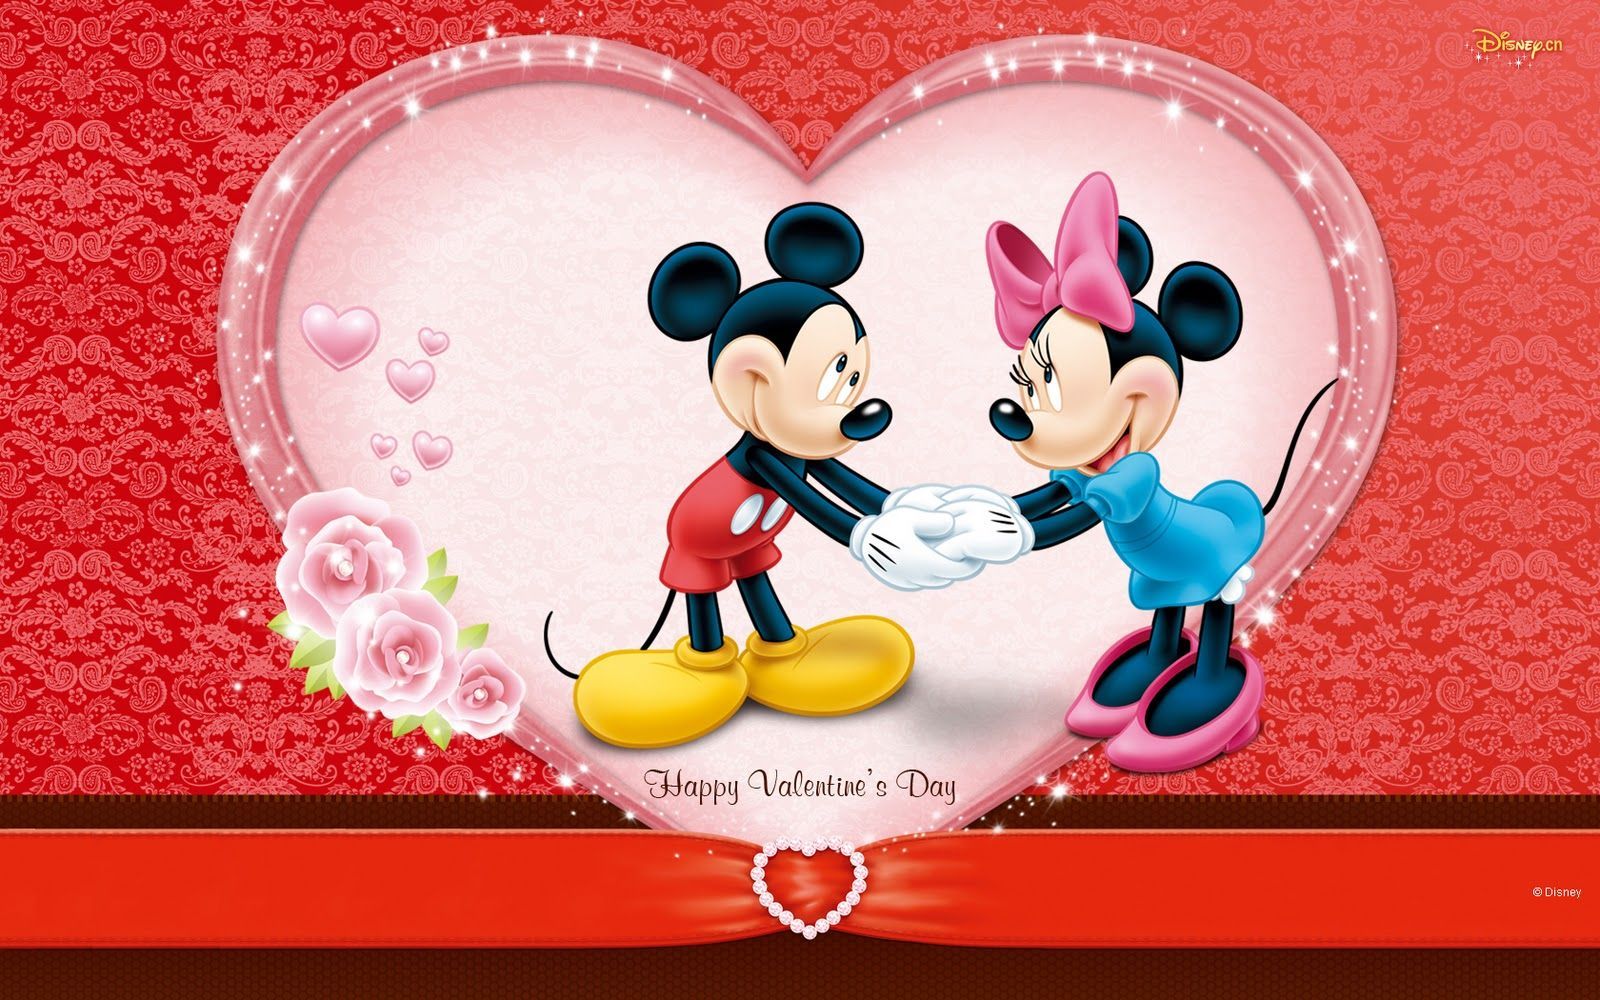 Free Valentine Wallpaper For Desktop.. Card, E Cards 2013: Valentine's Day Desktop Wa. Mickey Mouse Wallpaper, Valentines Wallpaper, Disney Valentines